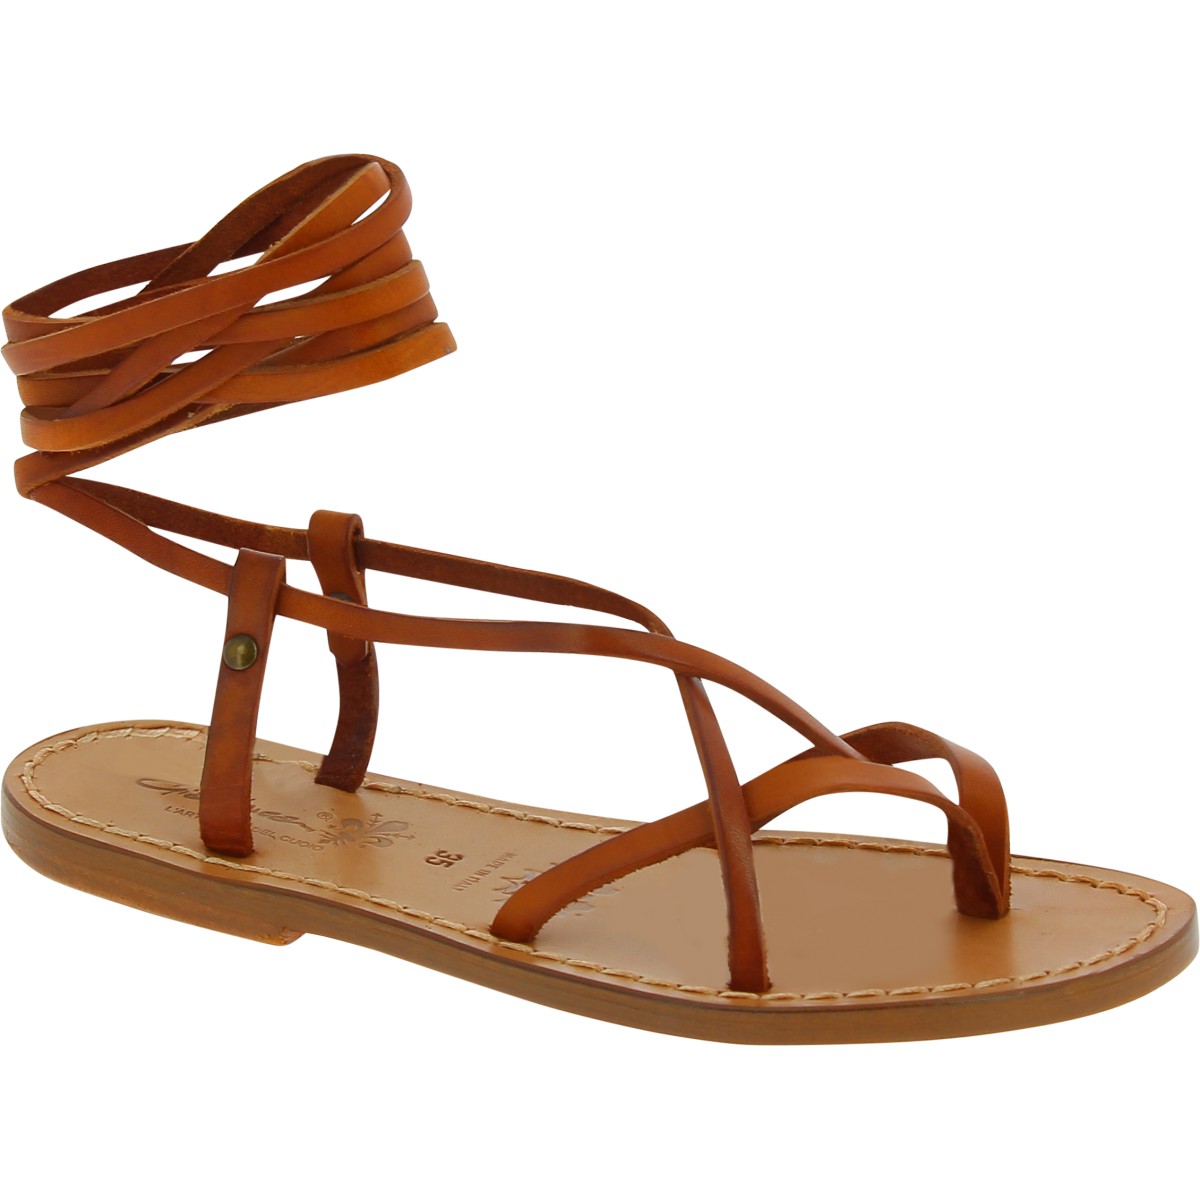 Tan Flat Strappy Sandals - Sandal Design